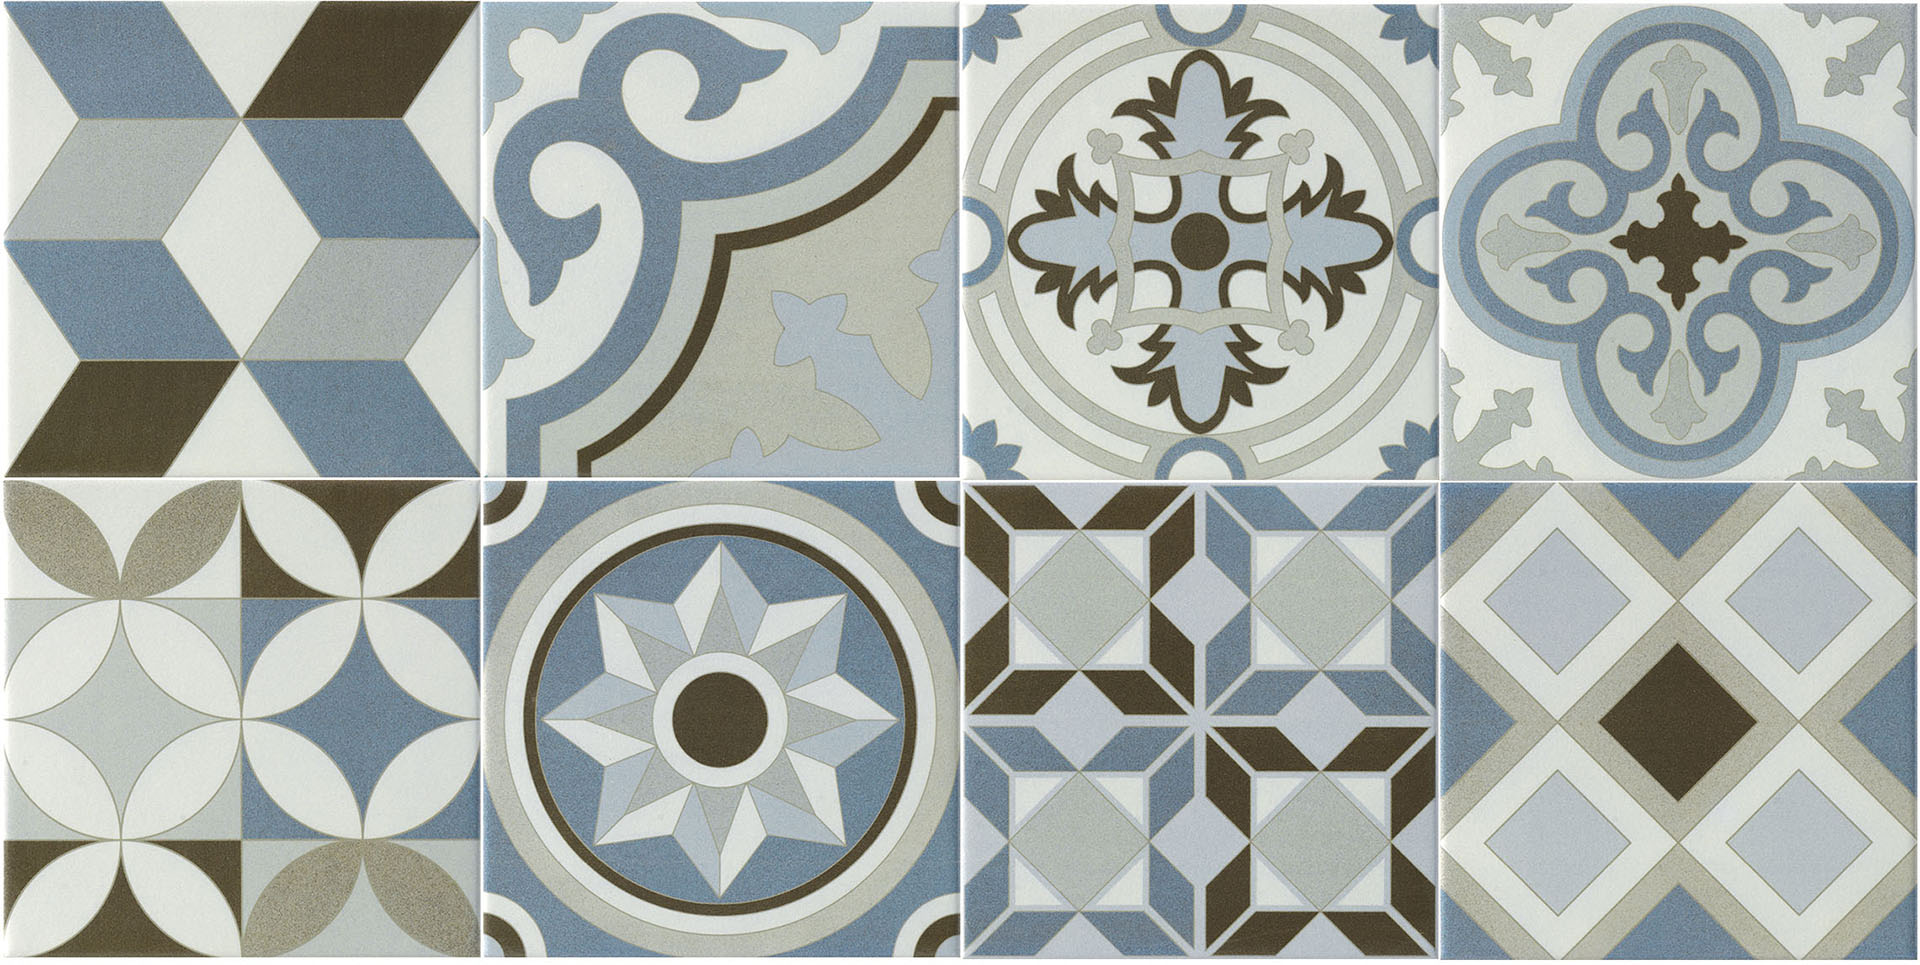 https://i860.goodo.net/richmond-decoration-ceramic-tile-mixed-dc62-product/